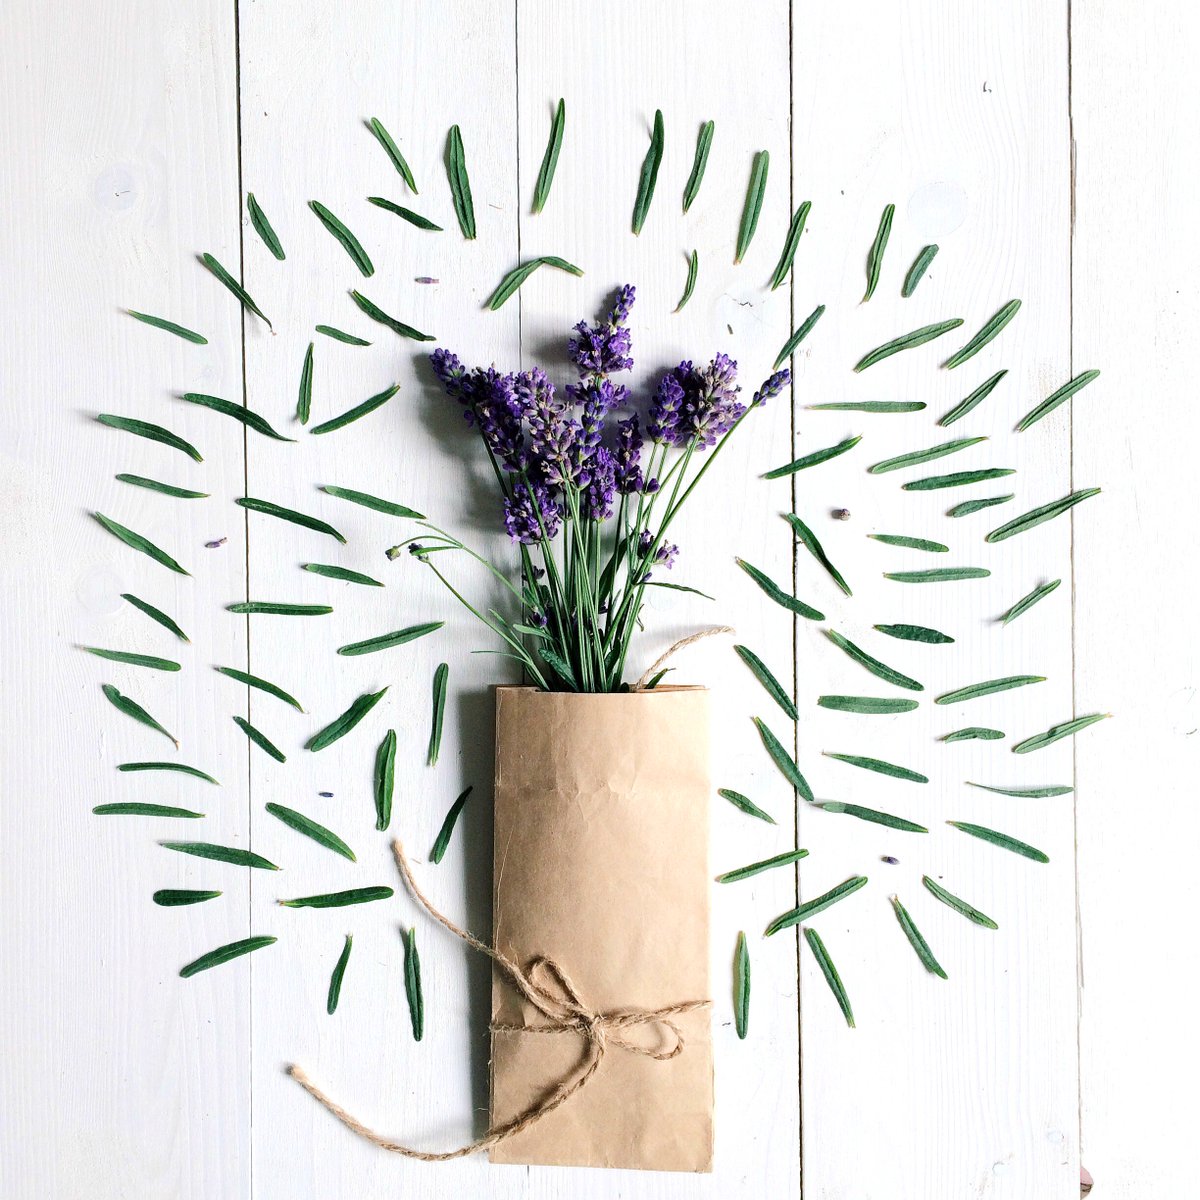 Soothing, natural & 100% vegan. Have you tried our #lavender oil? -> https://t.co/7nfotV43nc #VeganHour https://t.co/HCFCjoJuwC